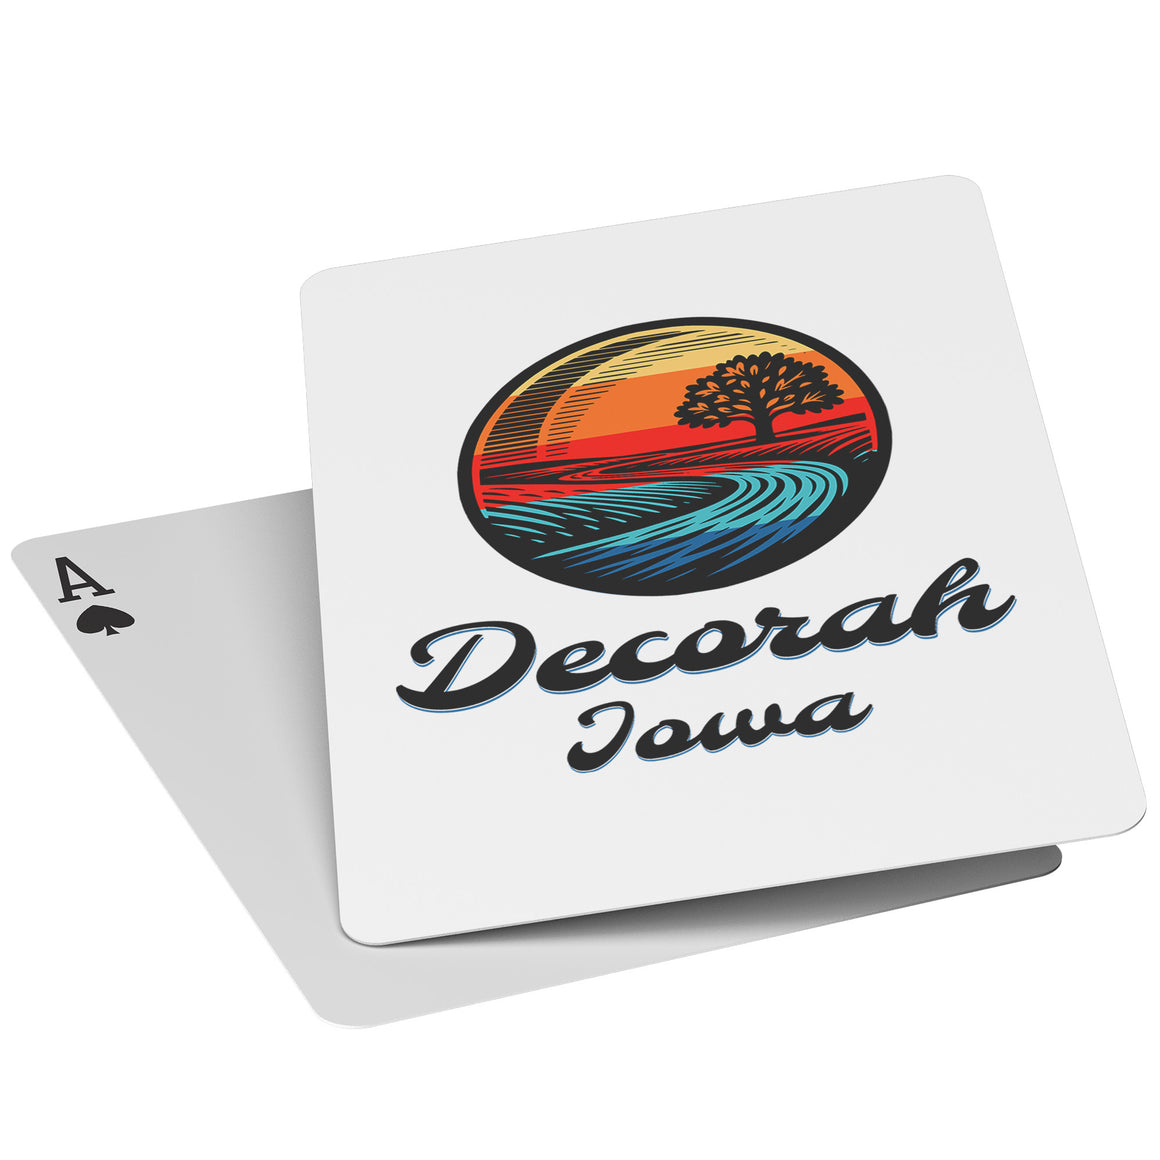 Decorah Iowa Playing Cards, Woodcut River